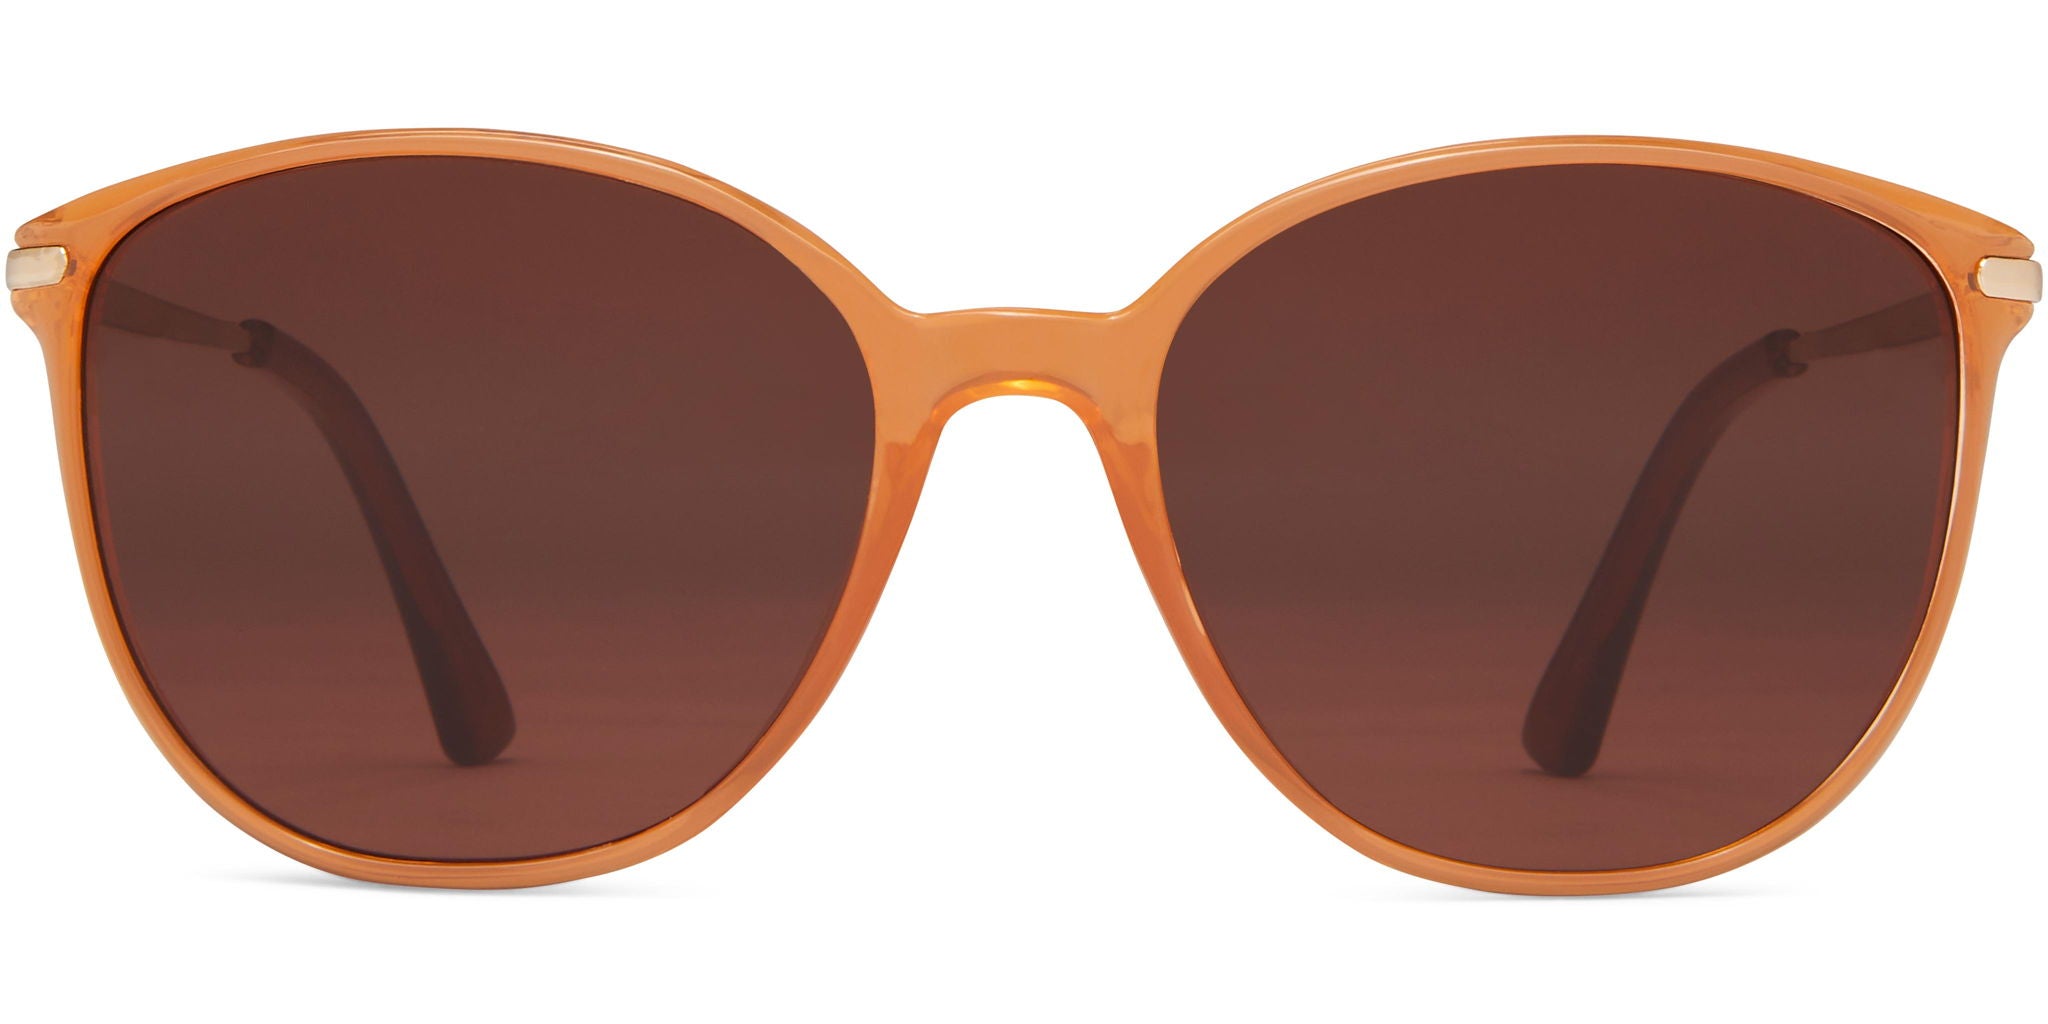 Chanel Aviator Sunglasses - The eyewear Blog Behind My Glasses